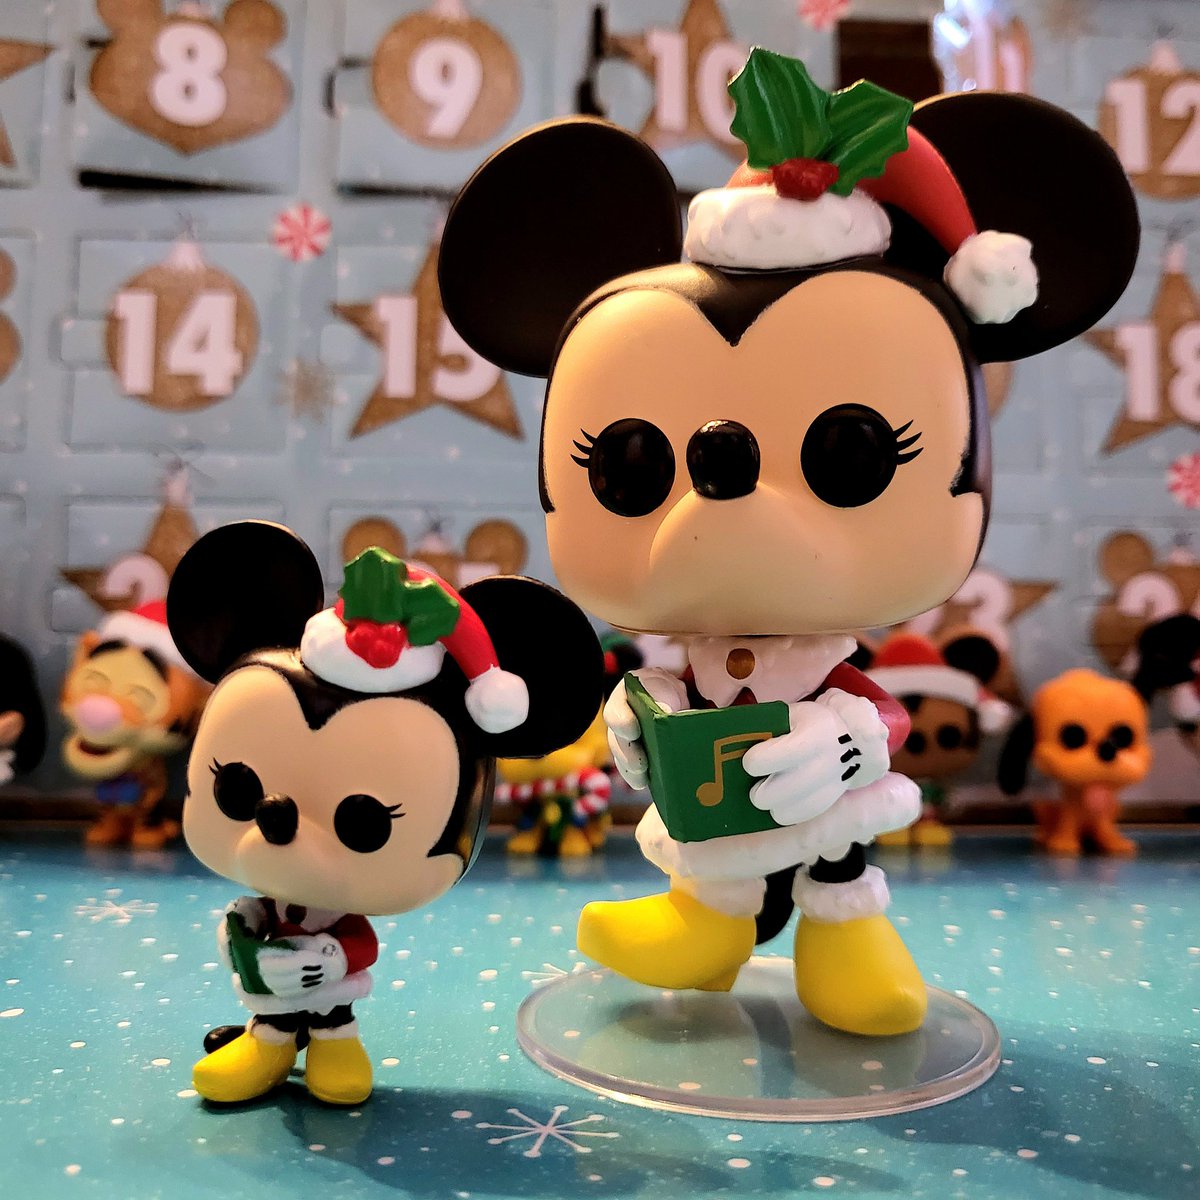 Dec 22: Countdown Minnie counting down the days till Christmas! @OriginalFunko #FunkoPhotoADayChallenge